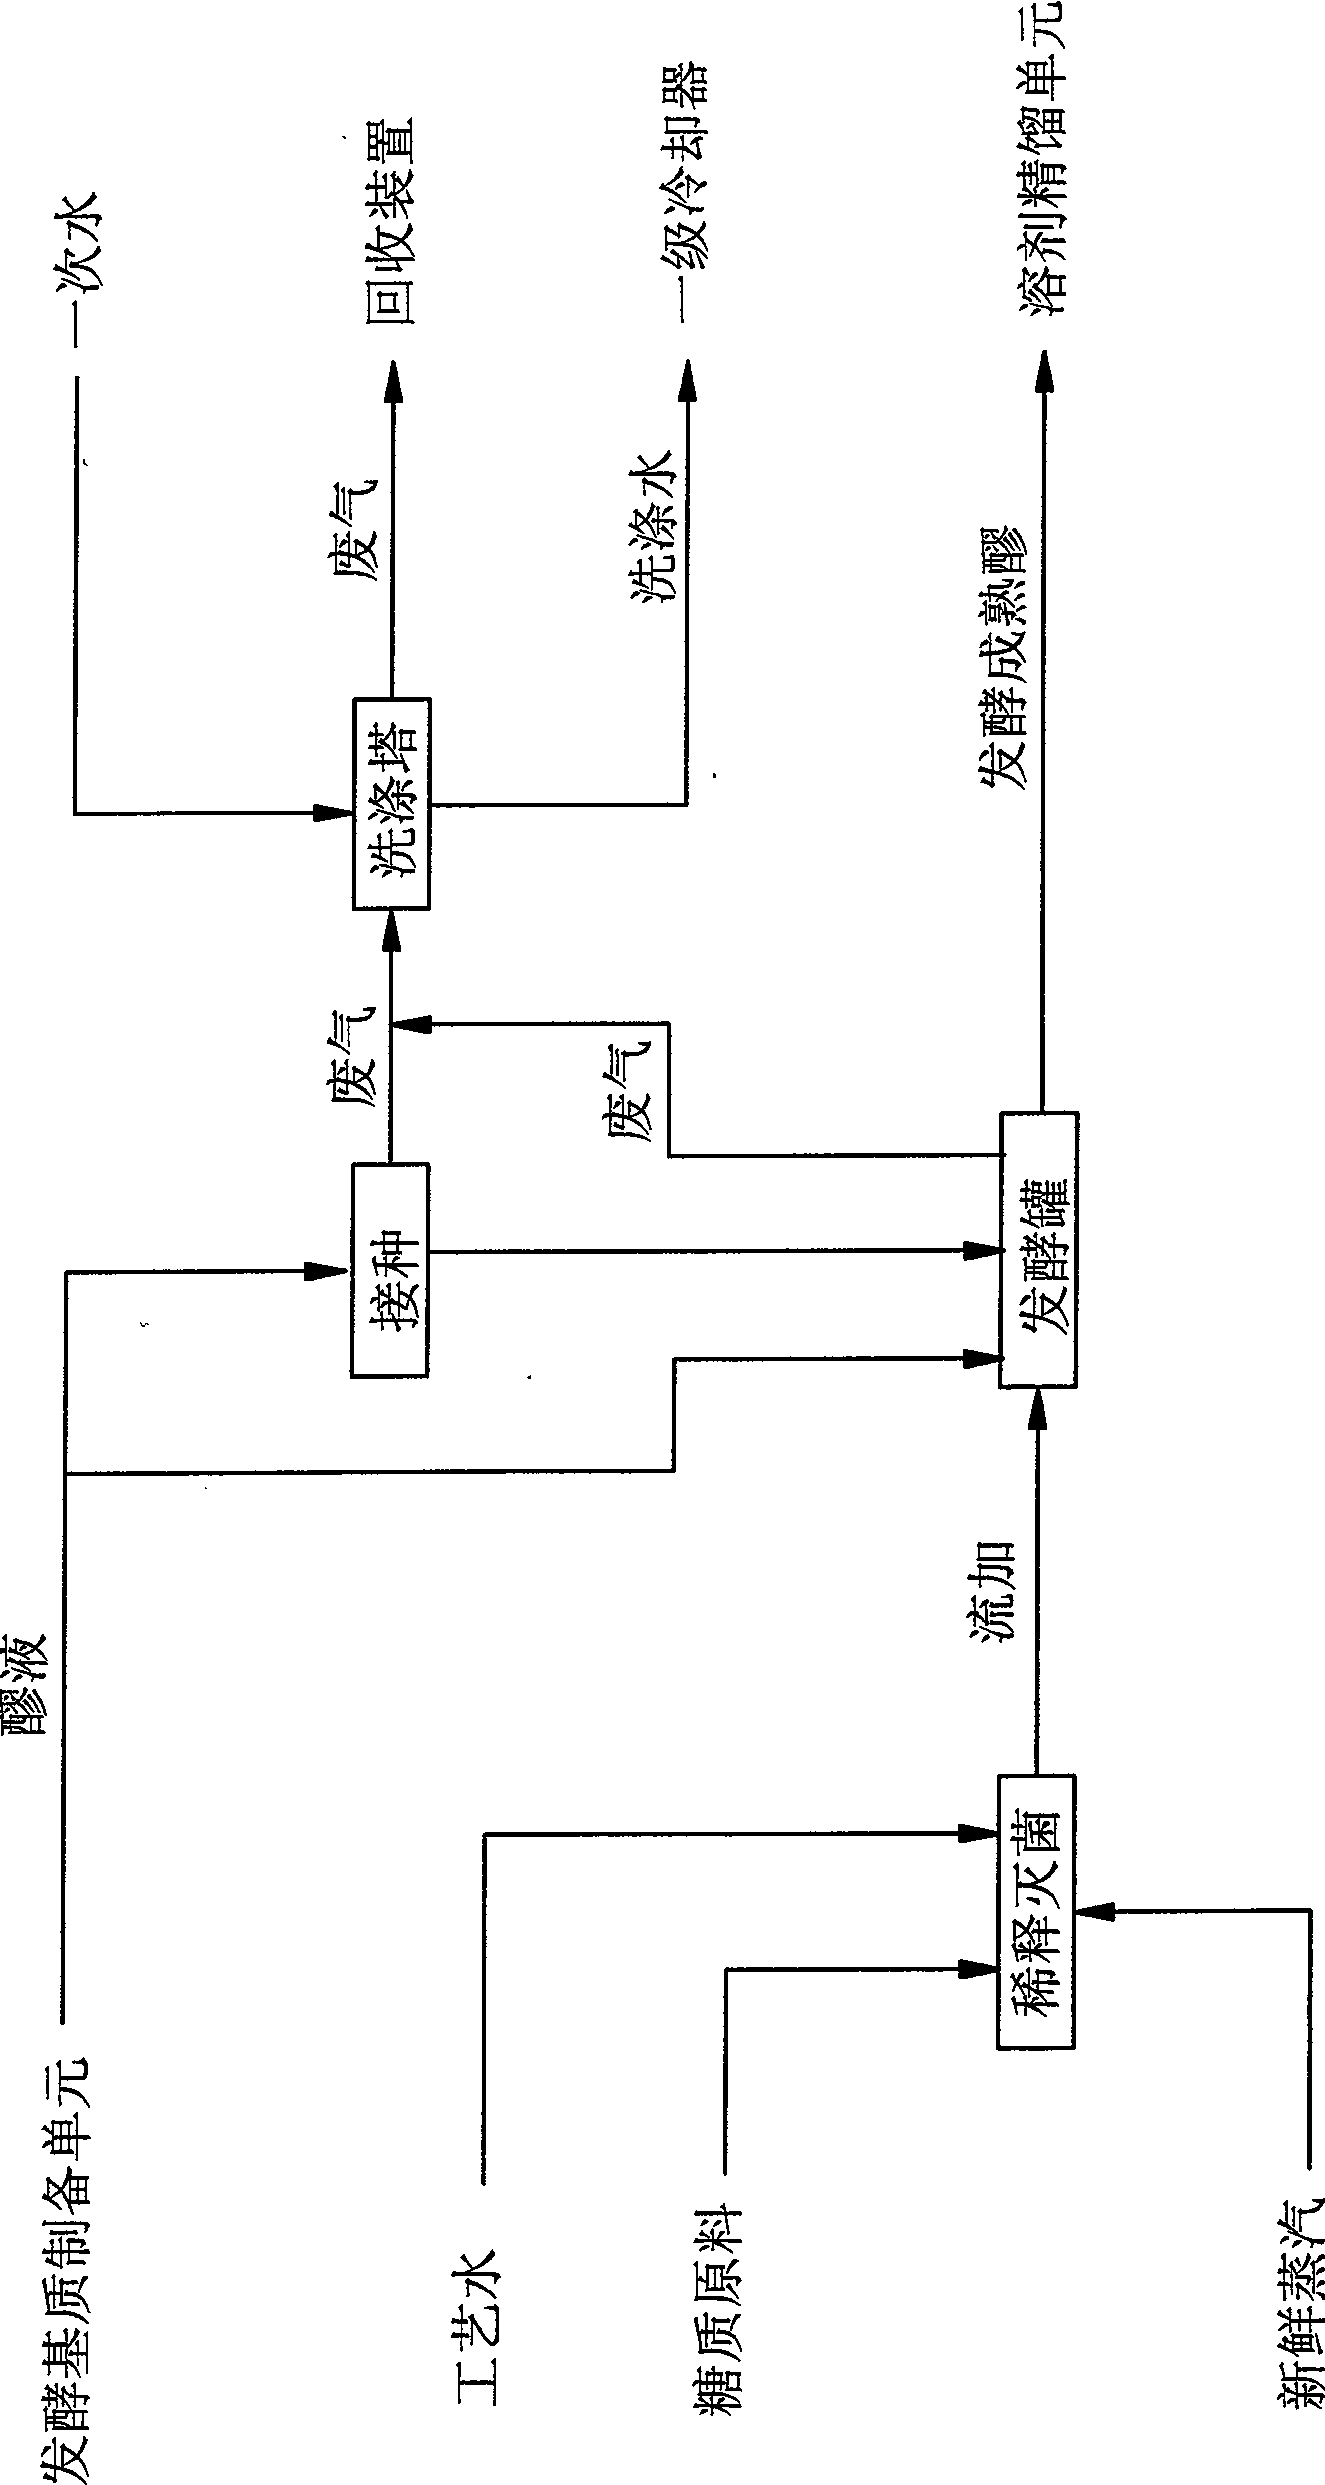 Method and apparatus for producing biological butanol